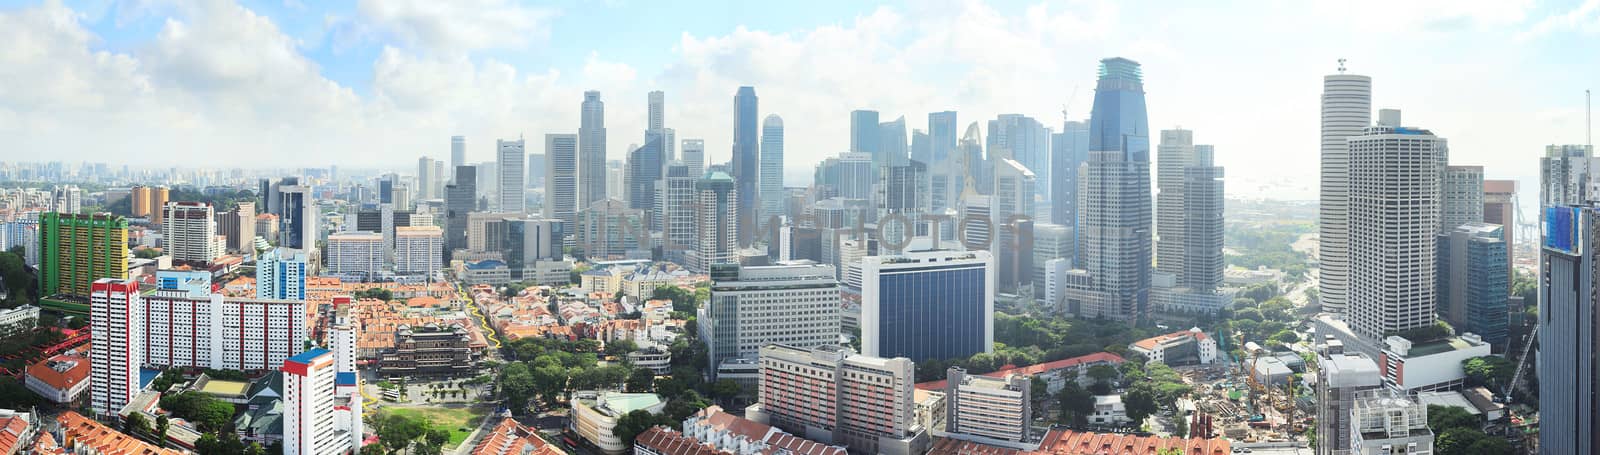 Singapore panorama by joyfull